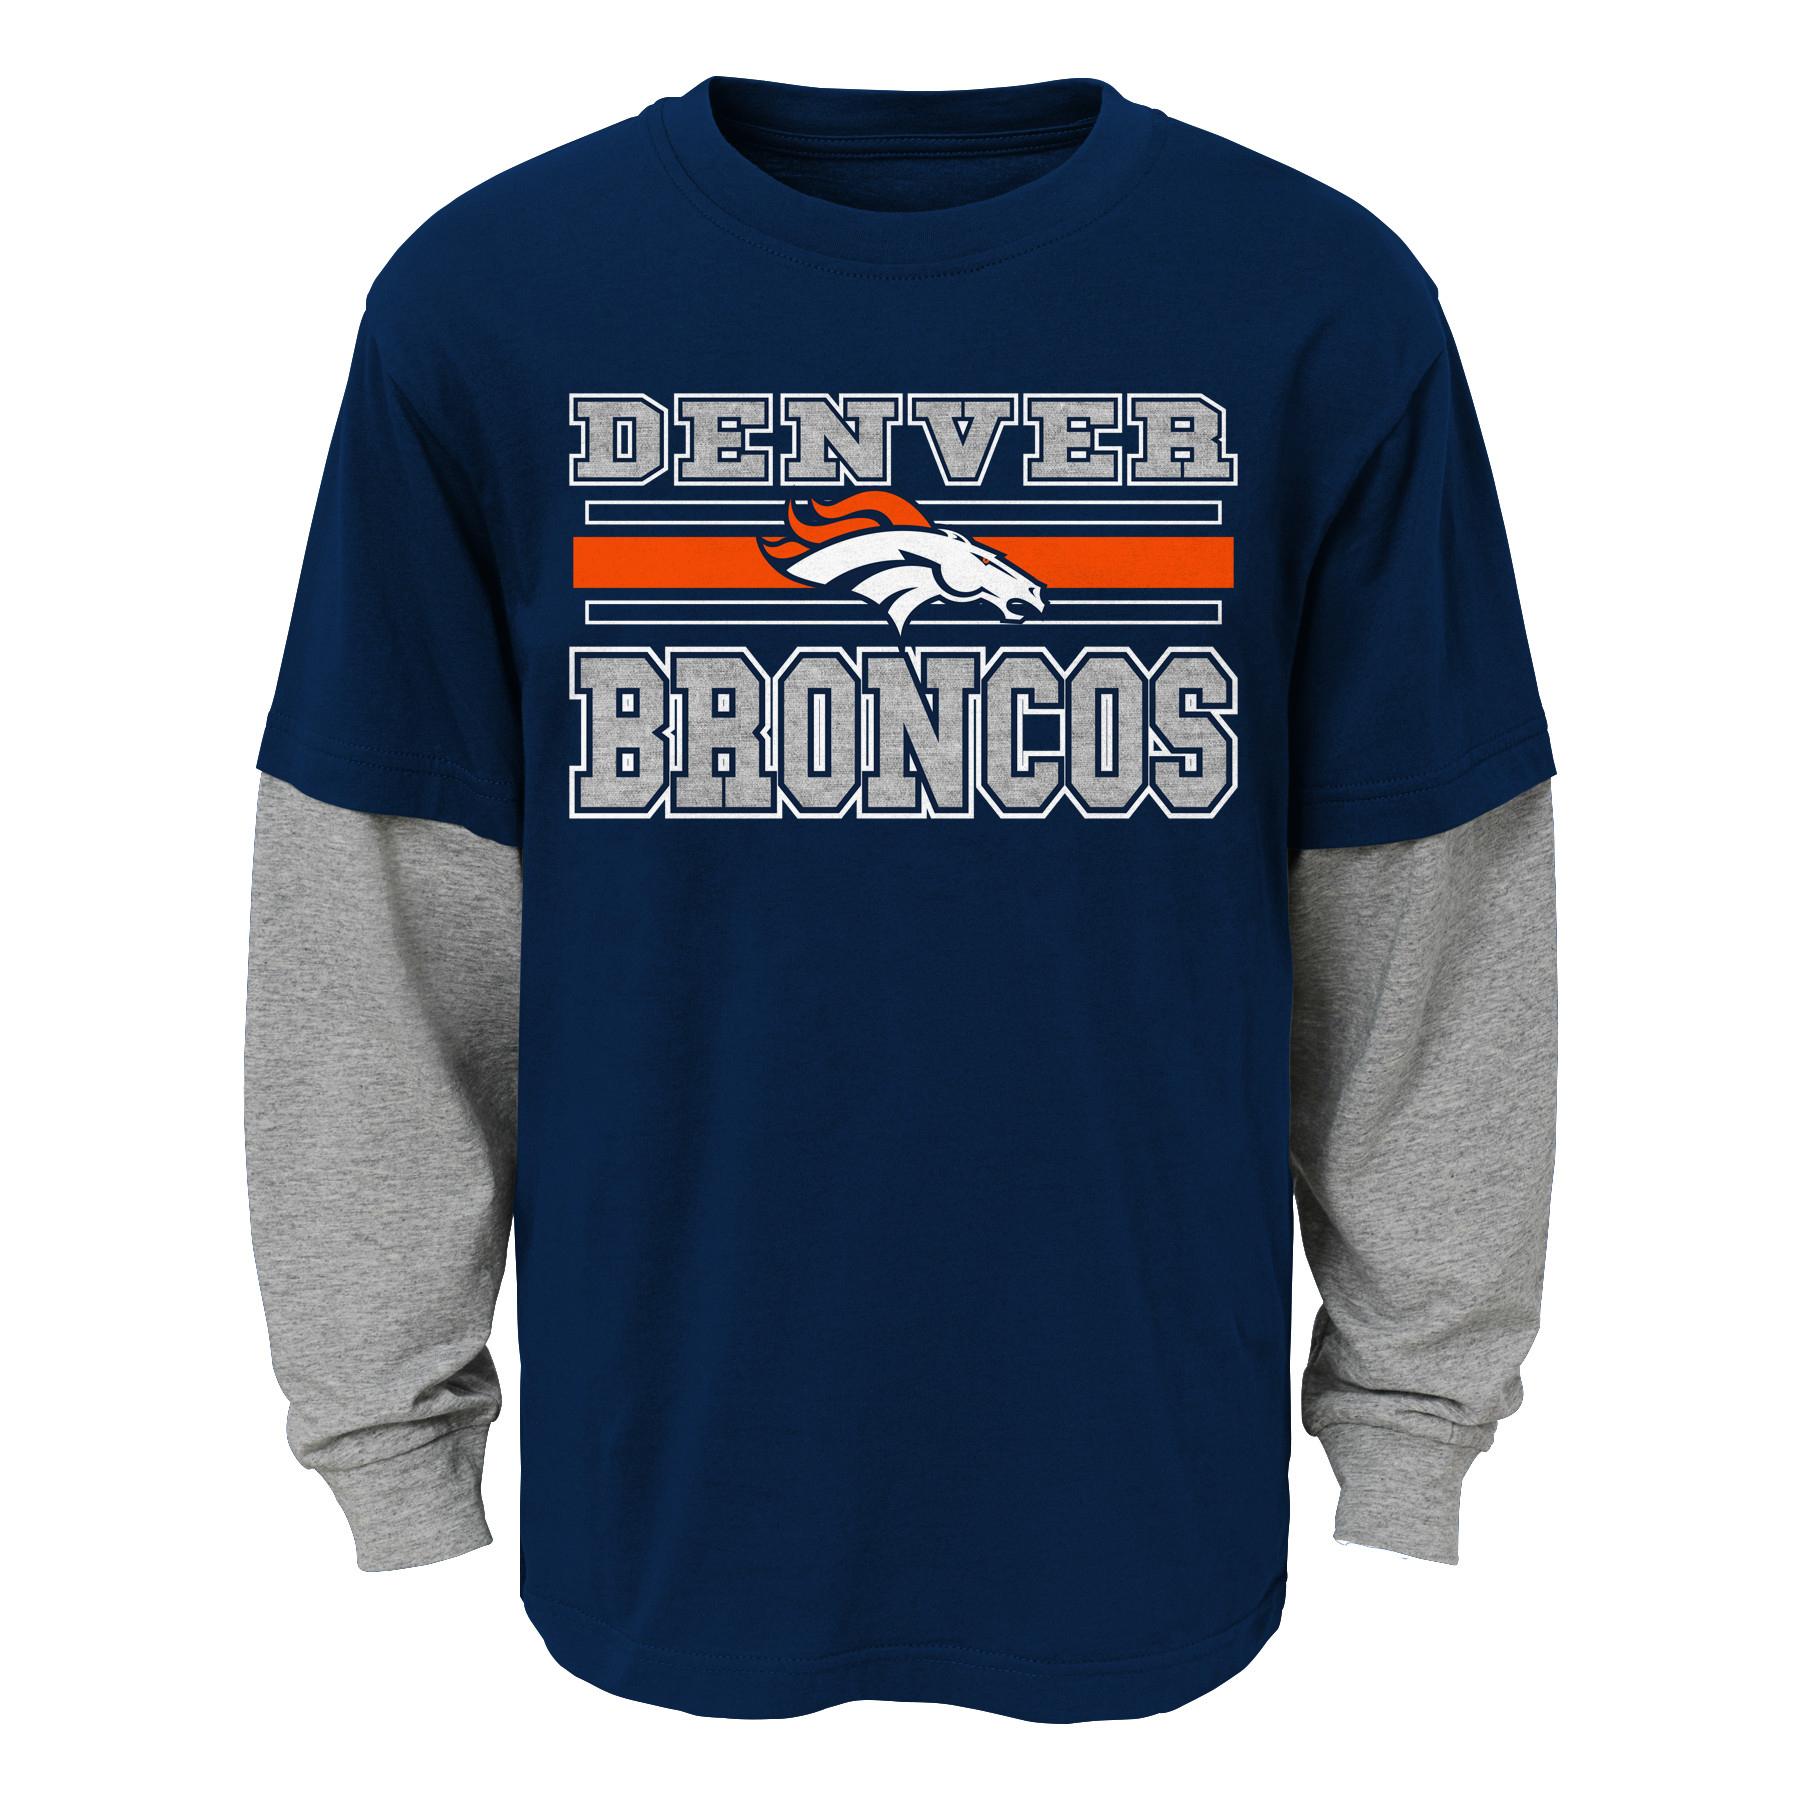 NFL Boys' Layered-Look Long-Sleeve Shirt - Denver Broncos